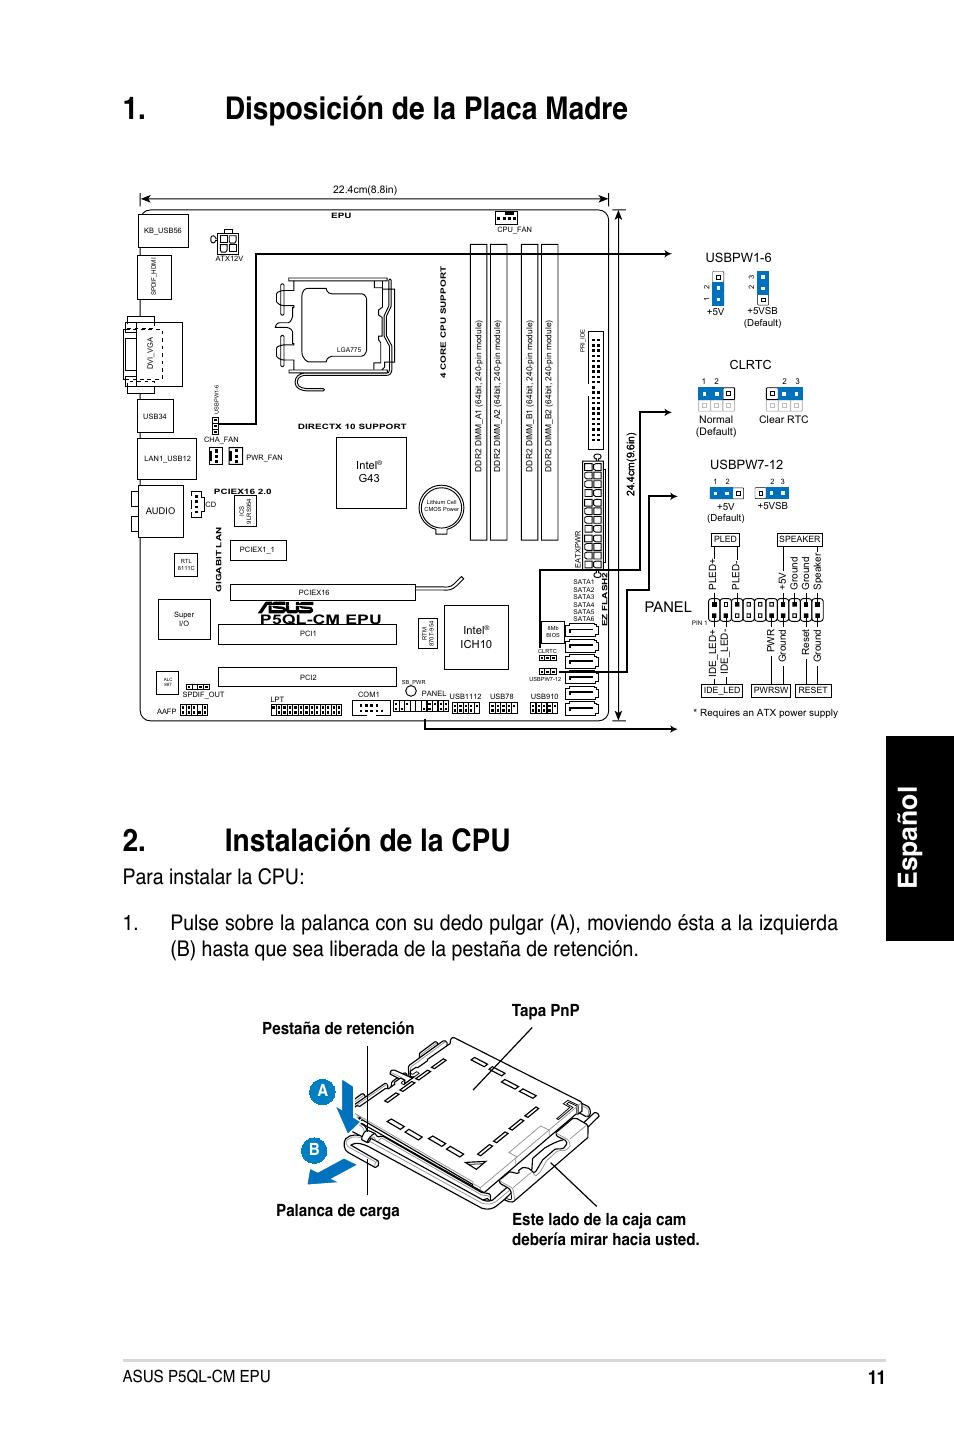 Español, Asus p5ql-cm epu, Panel | Asus P5QL-VM EPU User Manual | Page 11 /  38 | Original mode